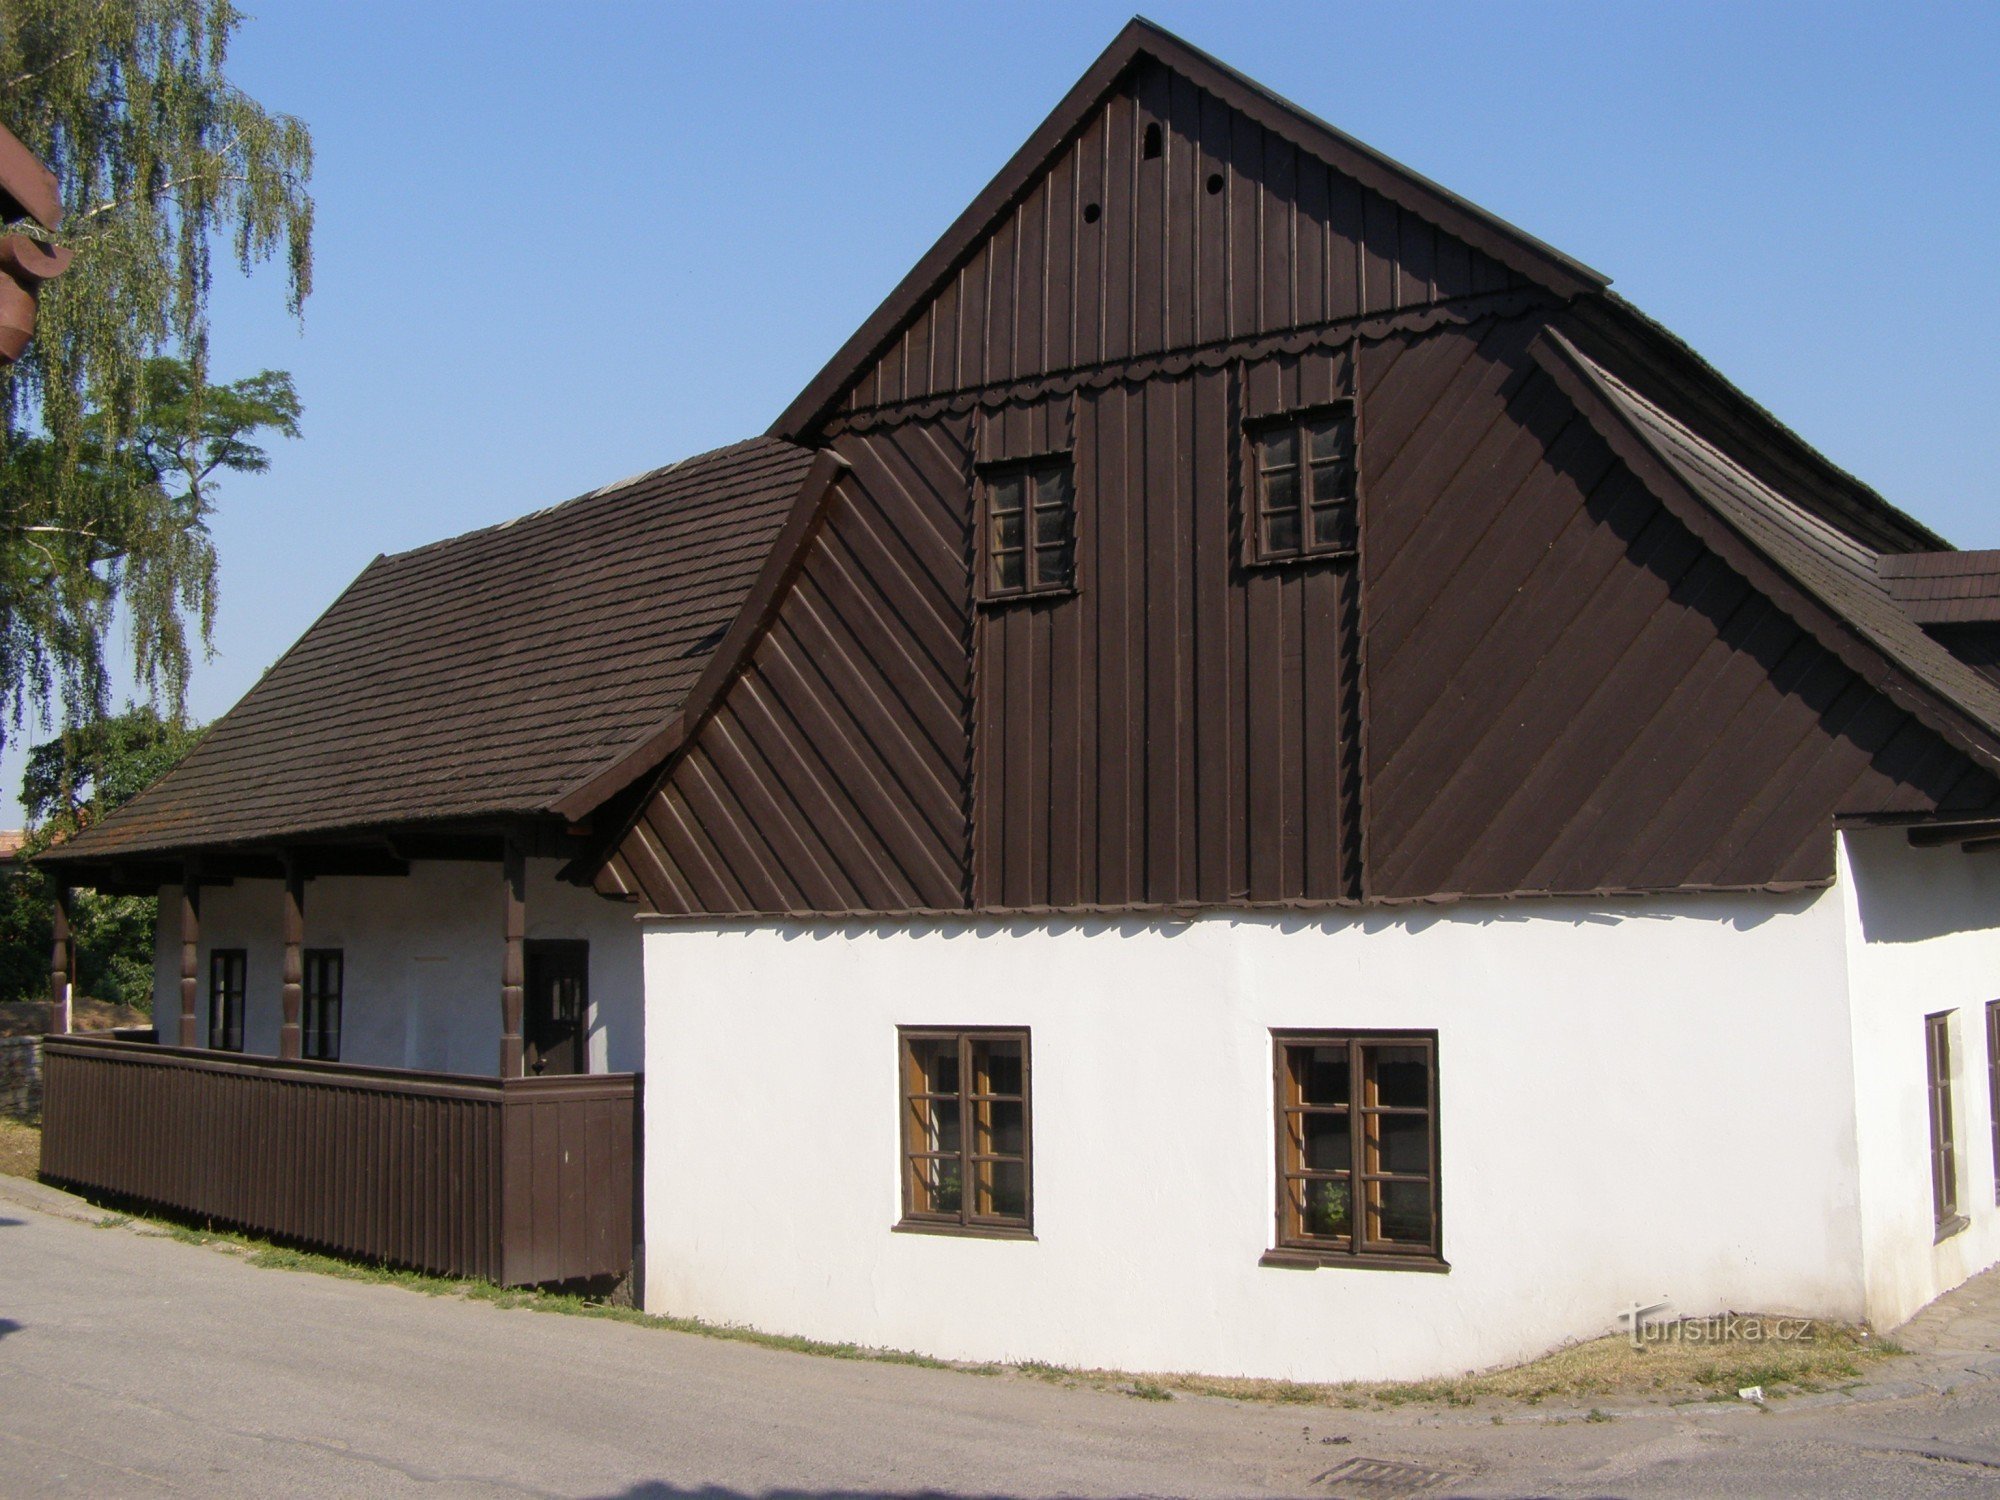 Dobruška - η γενέτειρα του FLVěk (Heka)